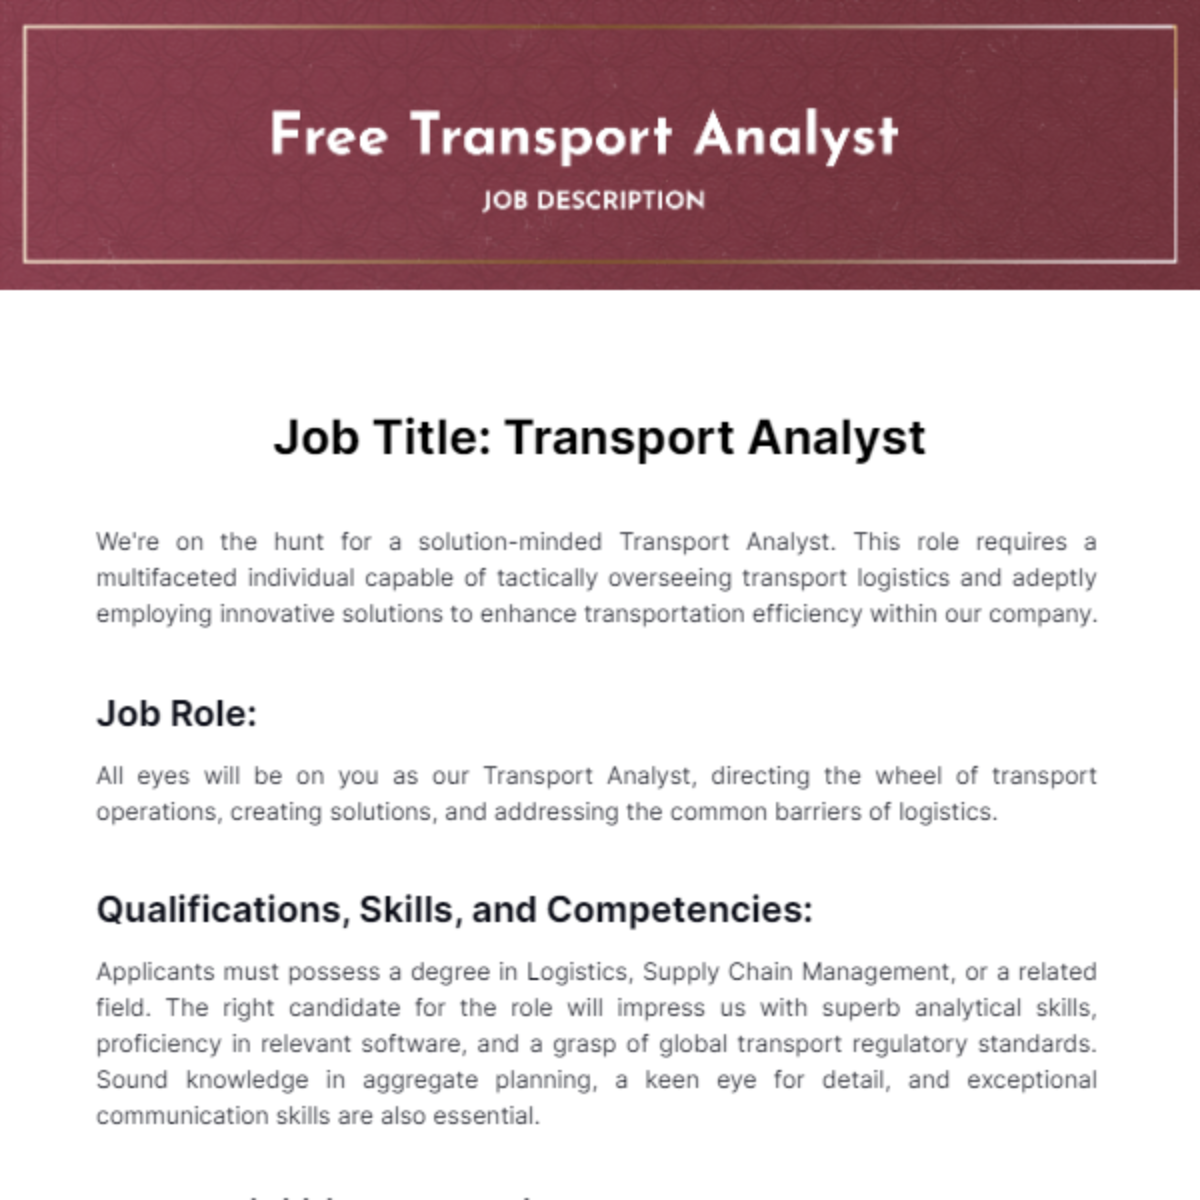 Free Transport Analyst Job Description Template